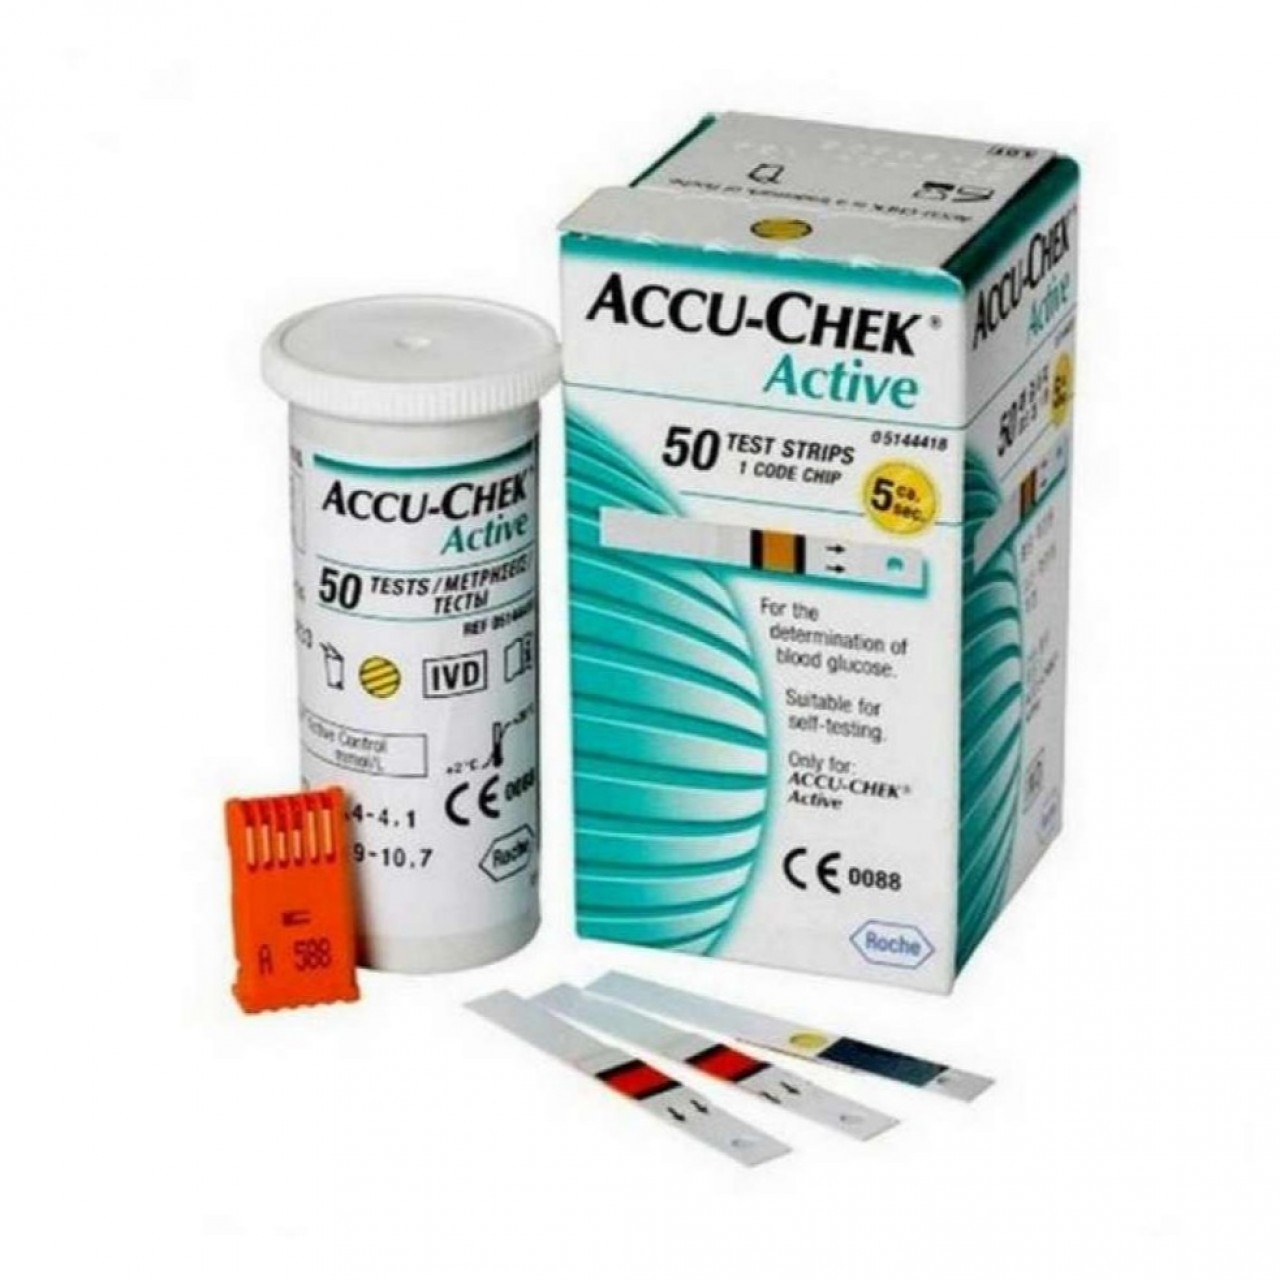 Accu Check Active Test Strip 50 Strip Box - Glucose